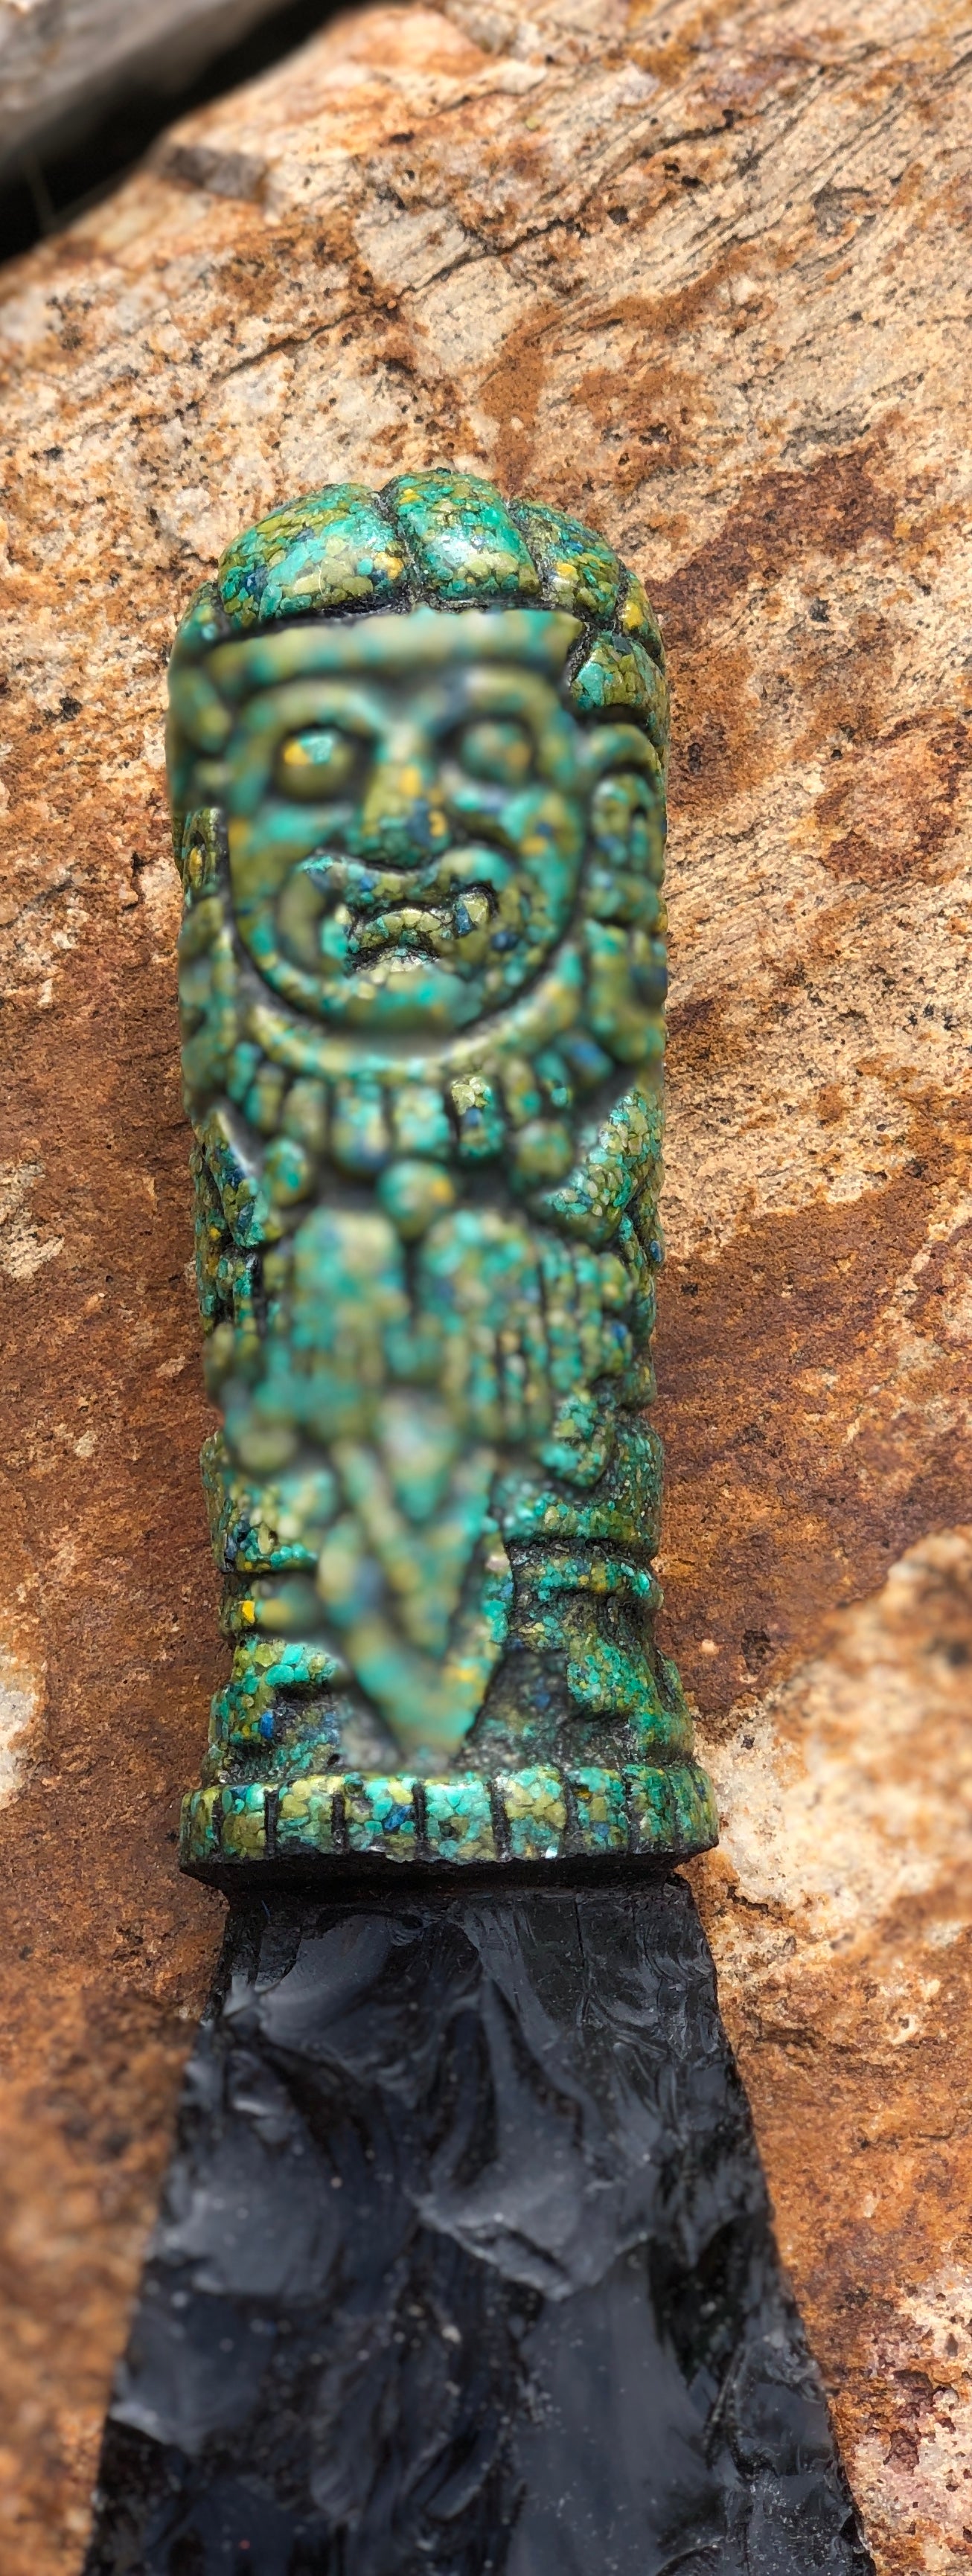 Decorative Aztec Tecpatl Obsidian Knives | Atlantean of Tula